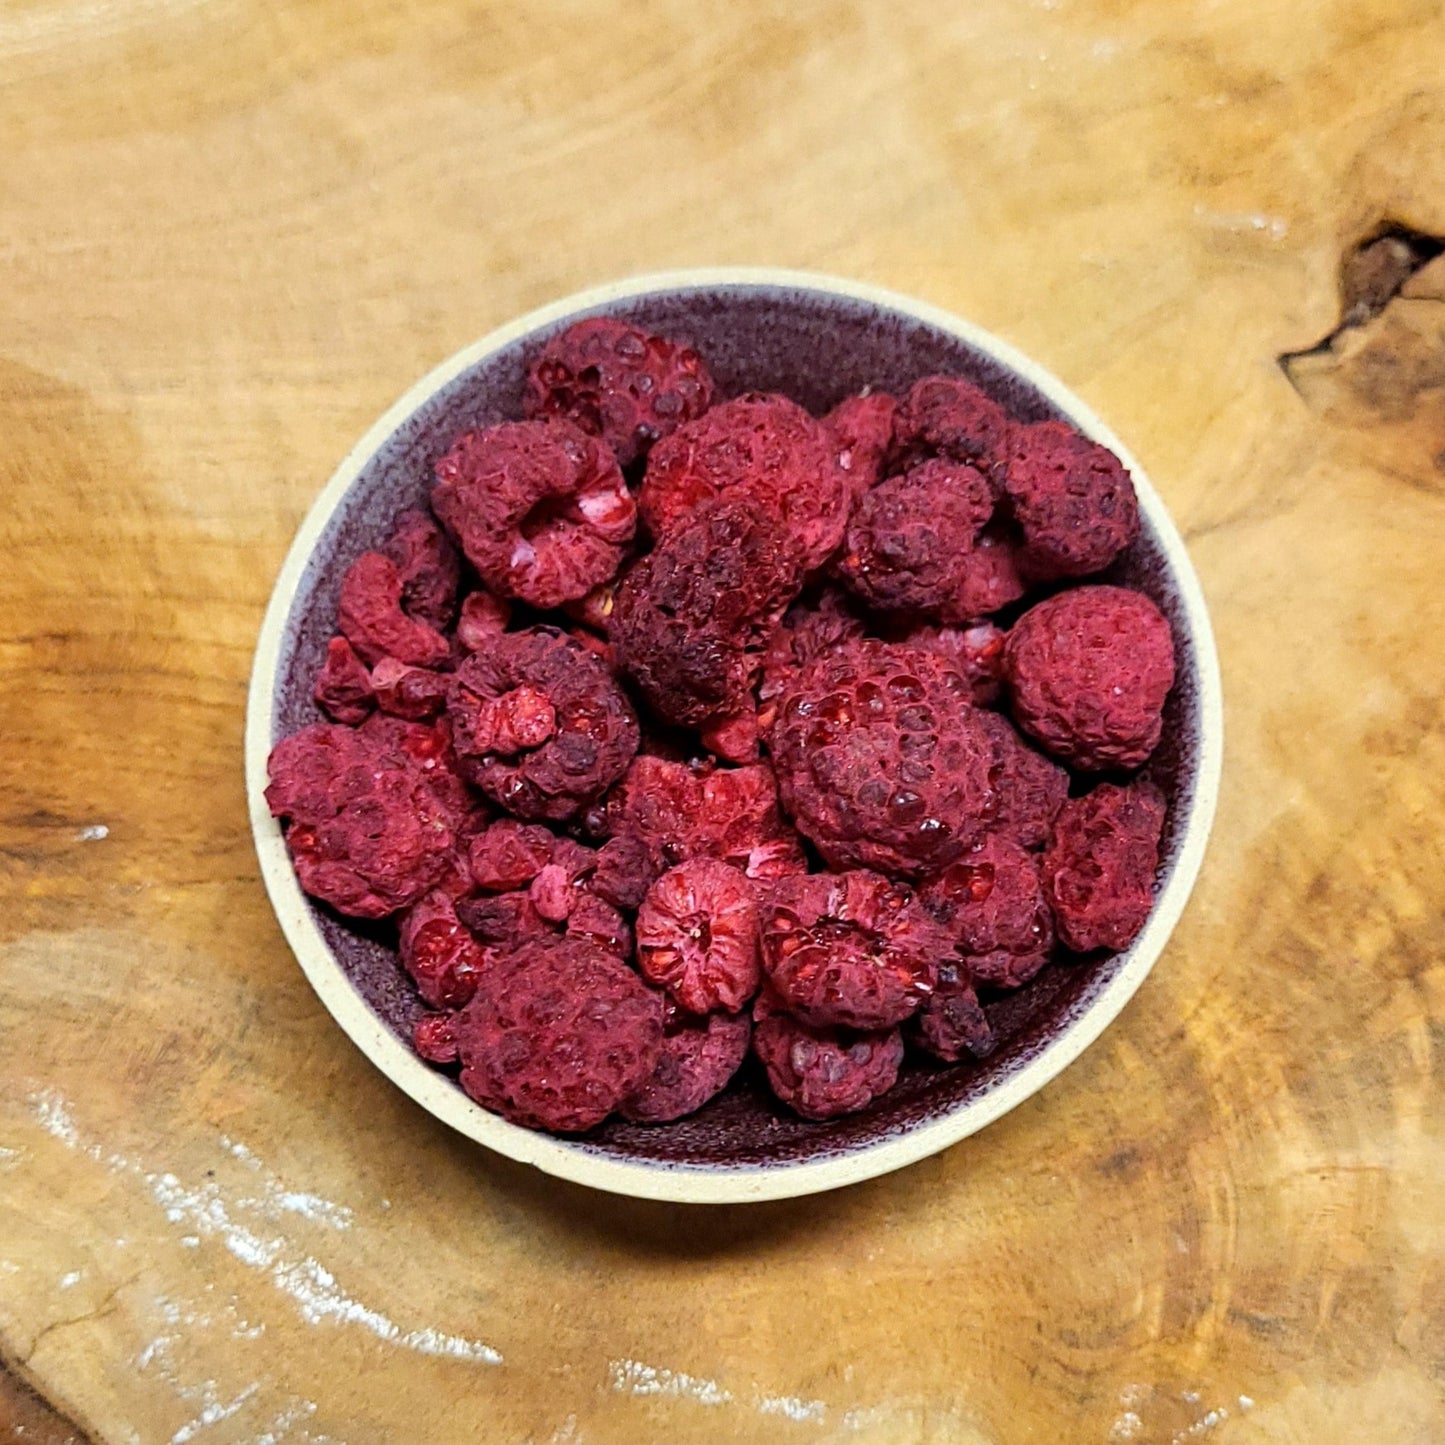 Framboise - Crunchy Fruit